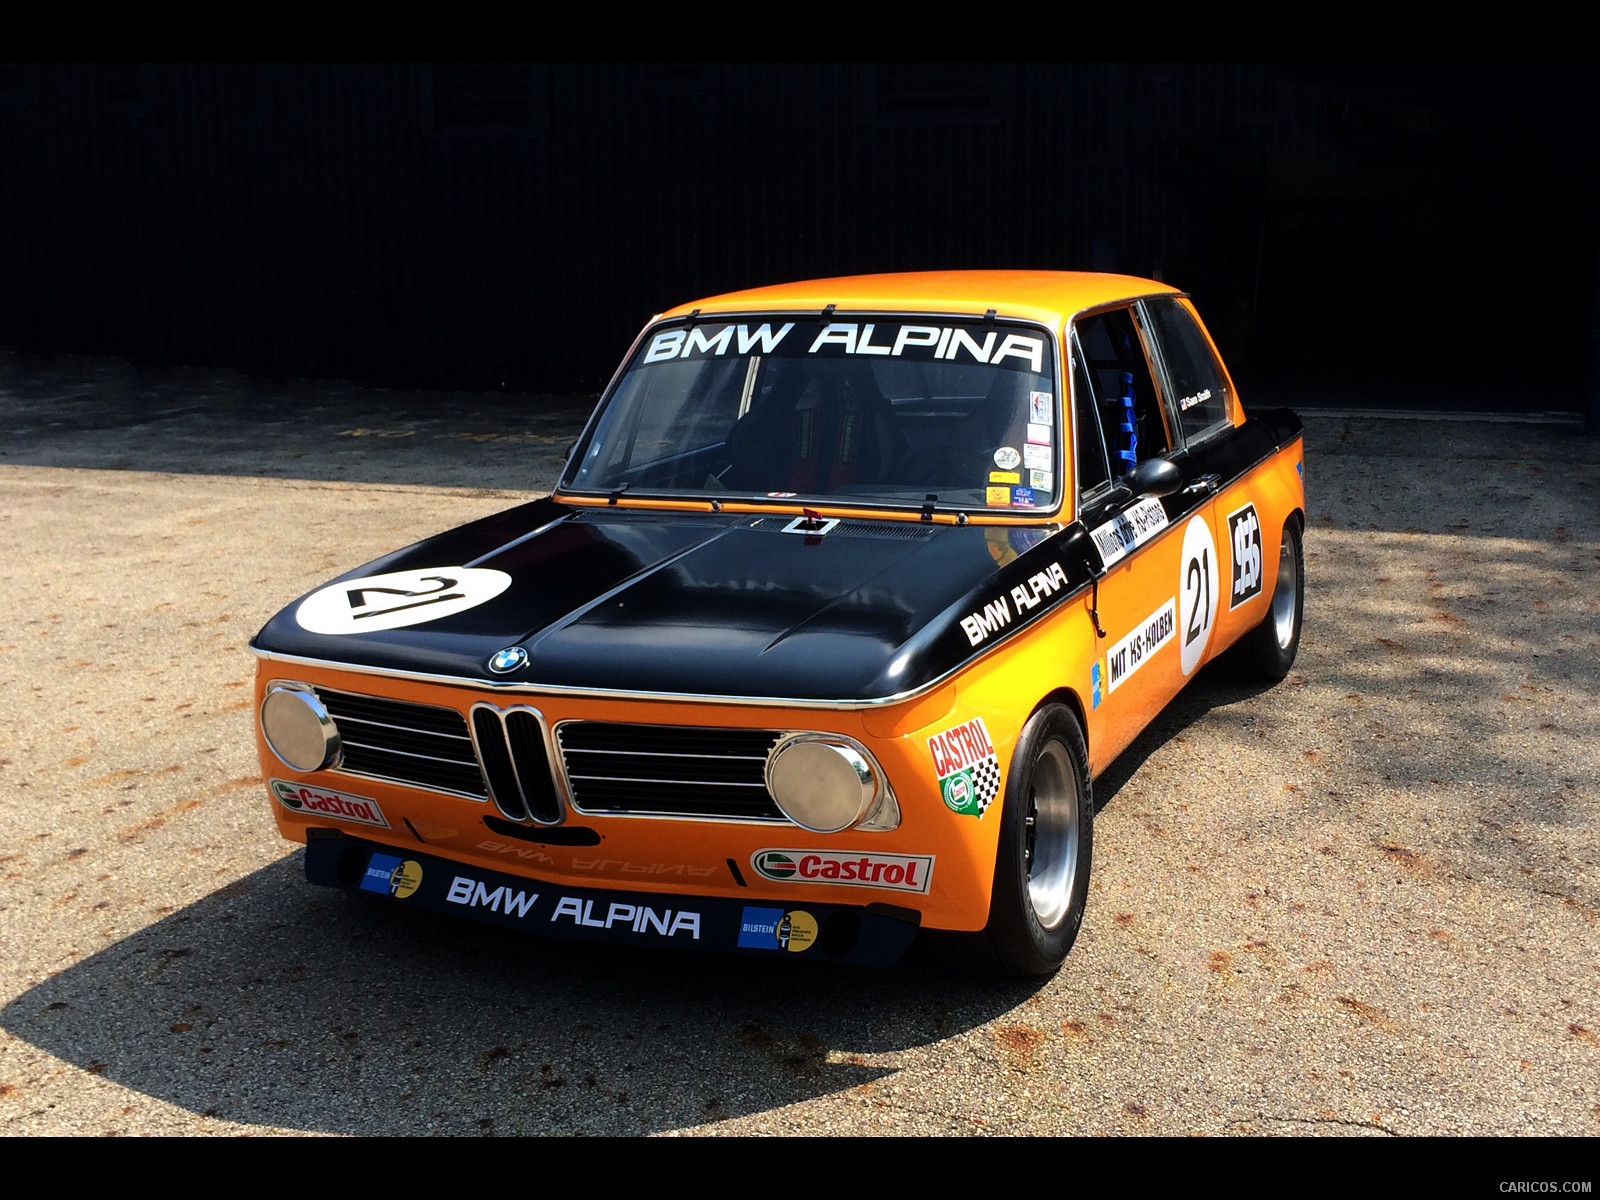 BMW ALPINA 2002ti Racing Approval 1970   caricos 